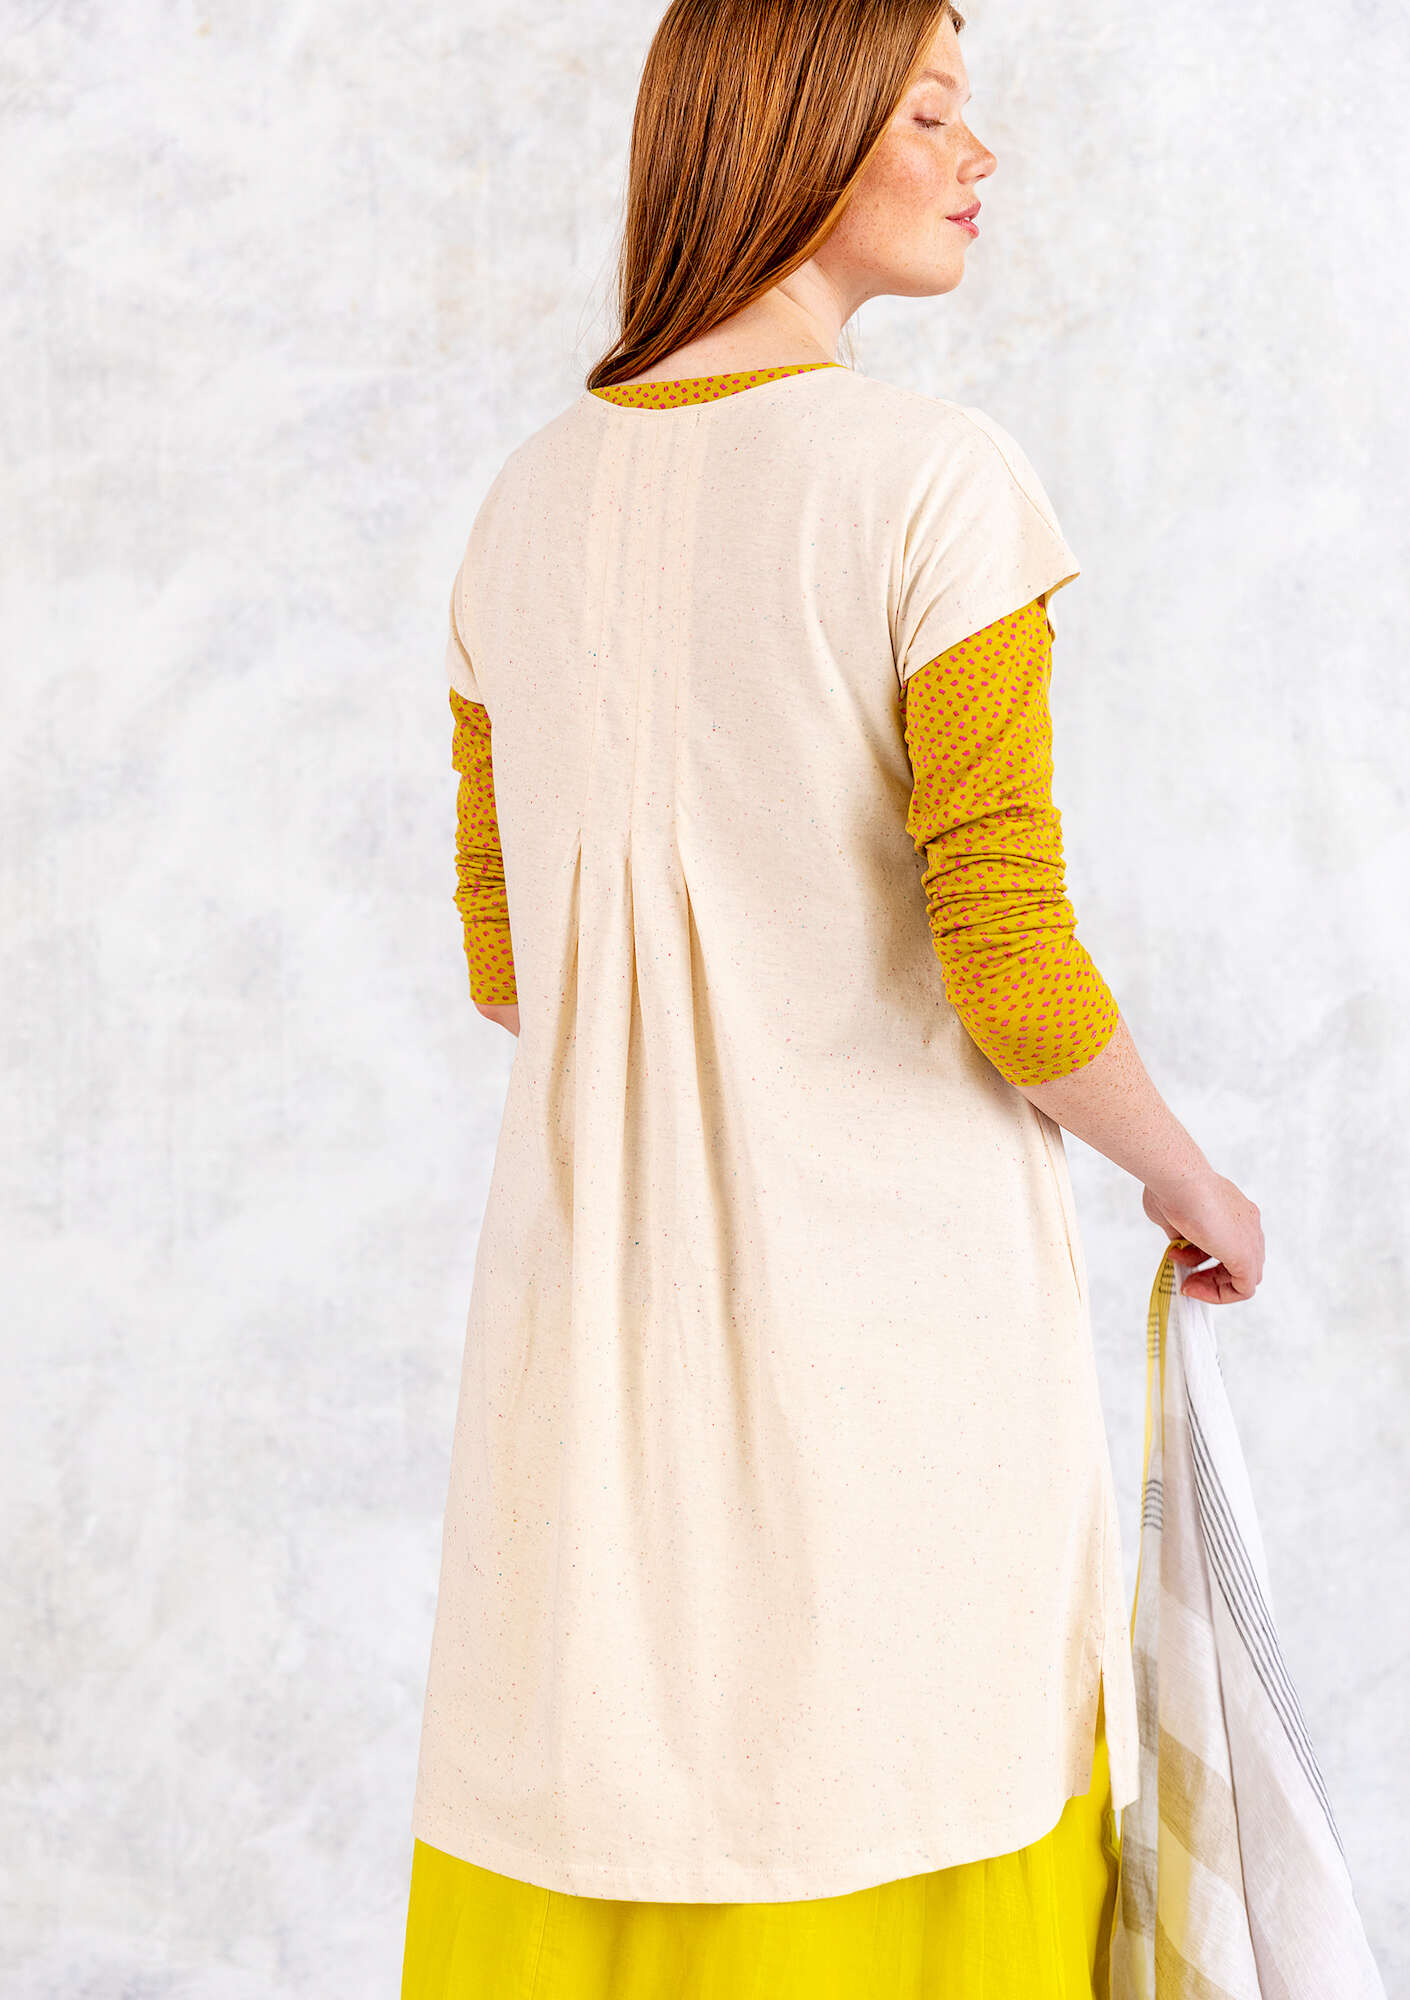 “Molly” jersey dress in nubby organic cotton almond milk